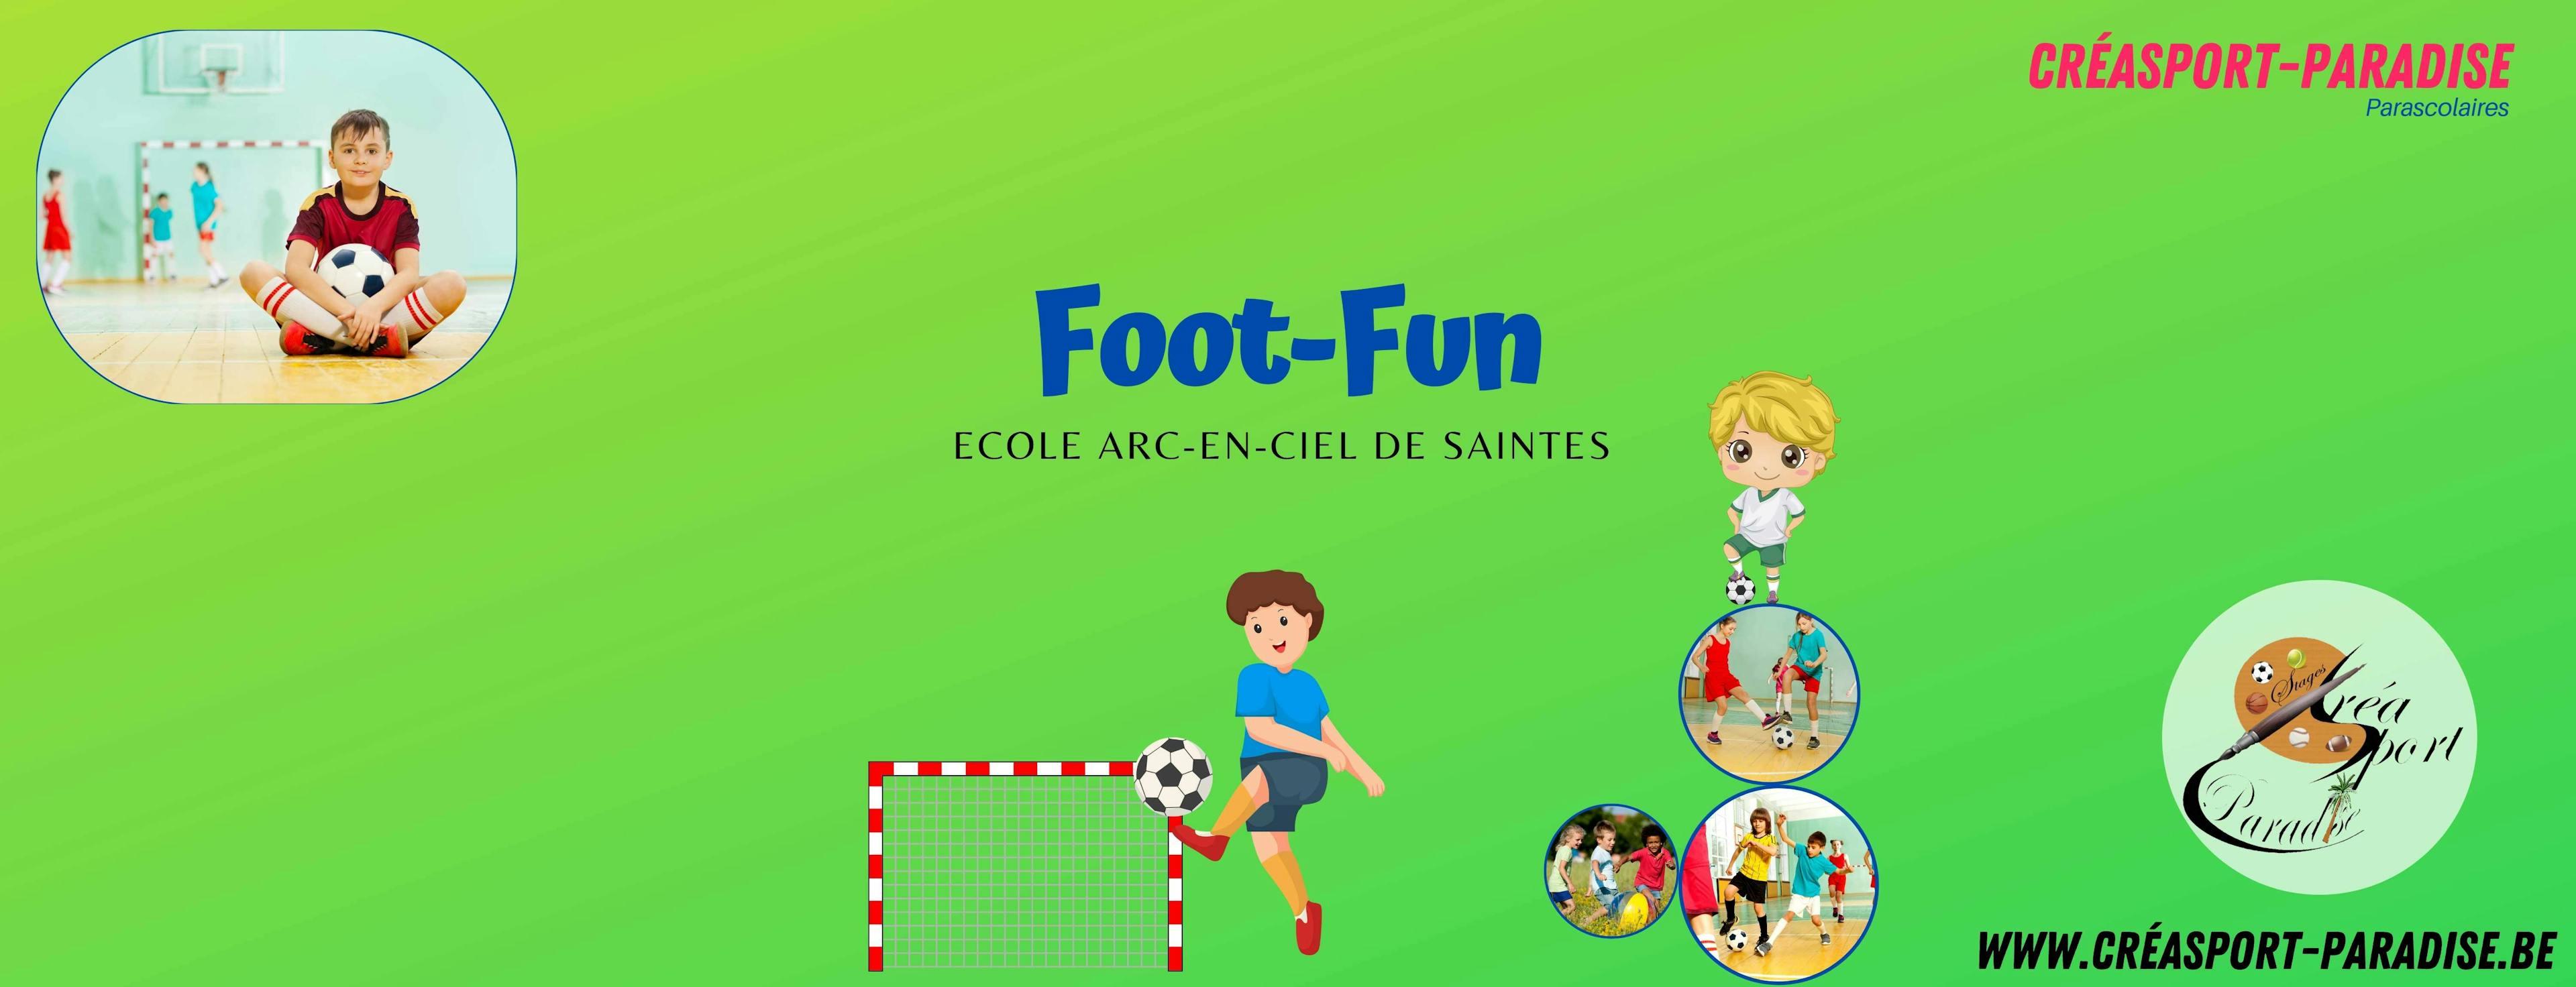 Parascolaires Ecole de Saintes - 15h20 JEUDI- Foot Fun